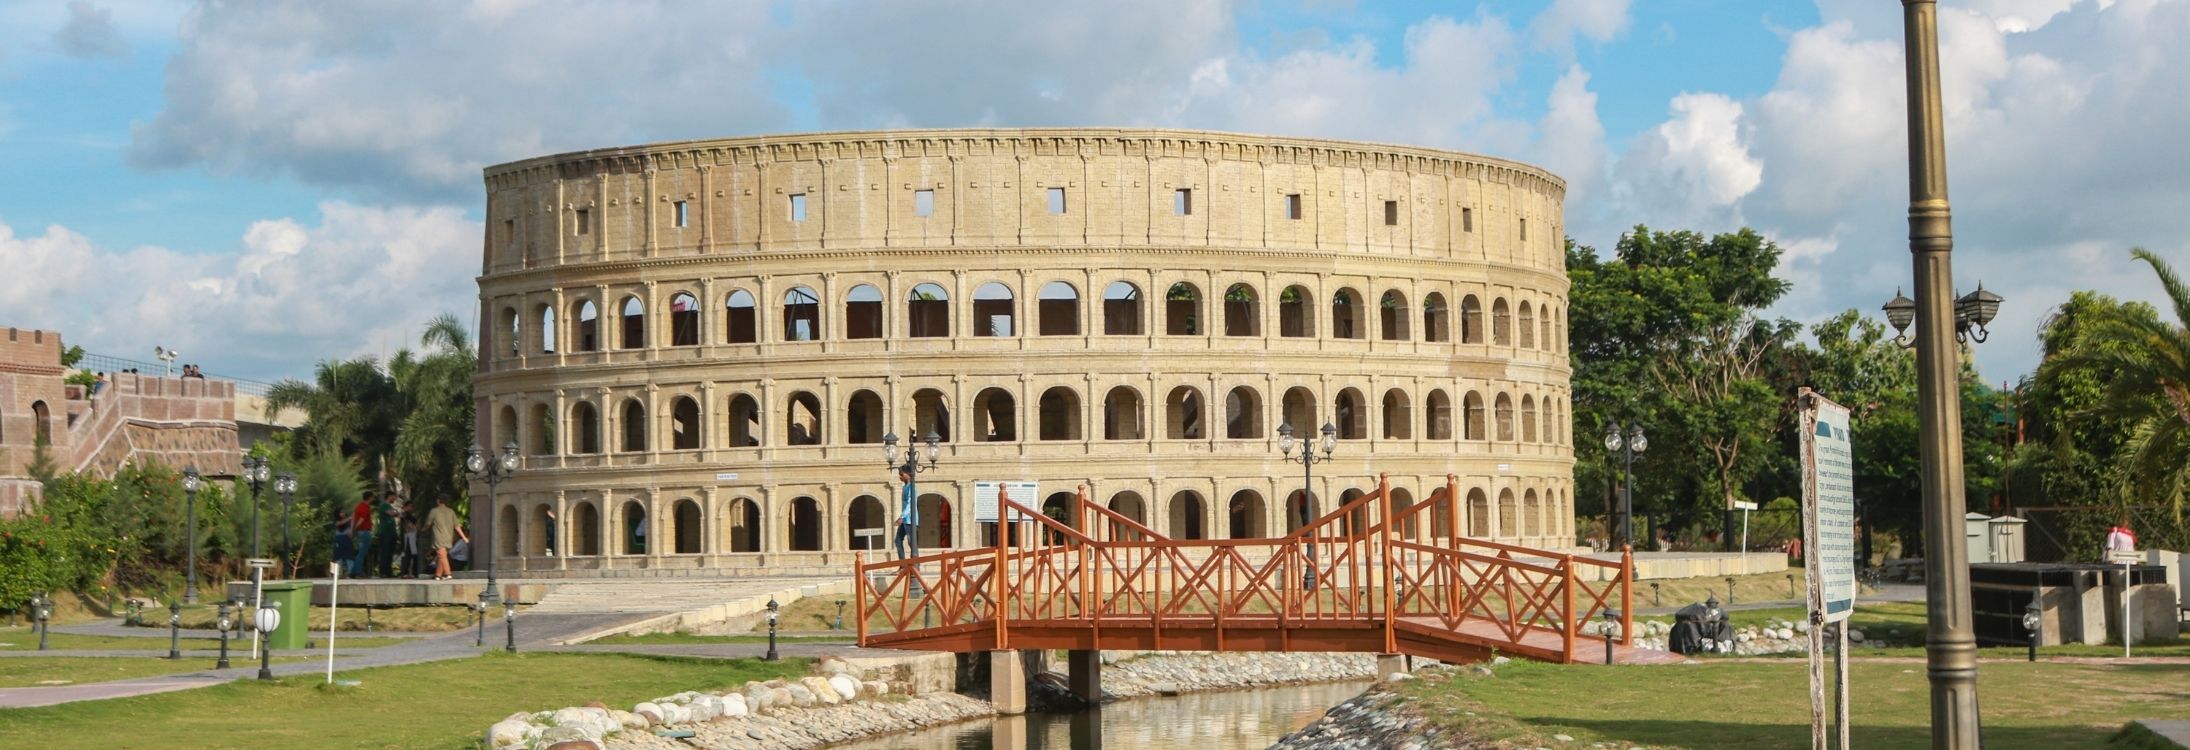 5. The Colosseum, Rome